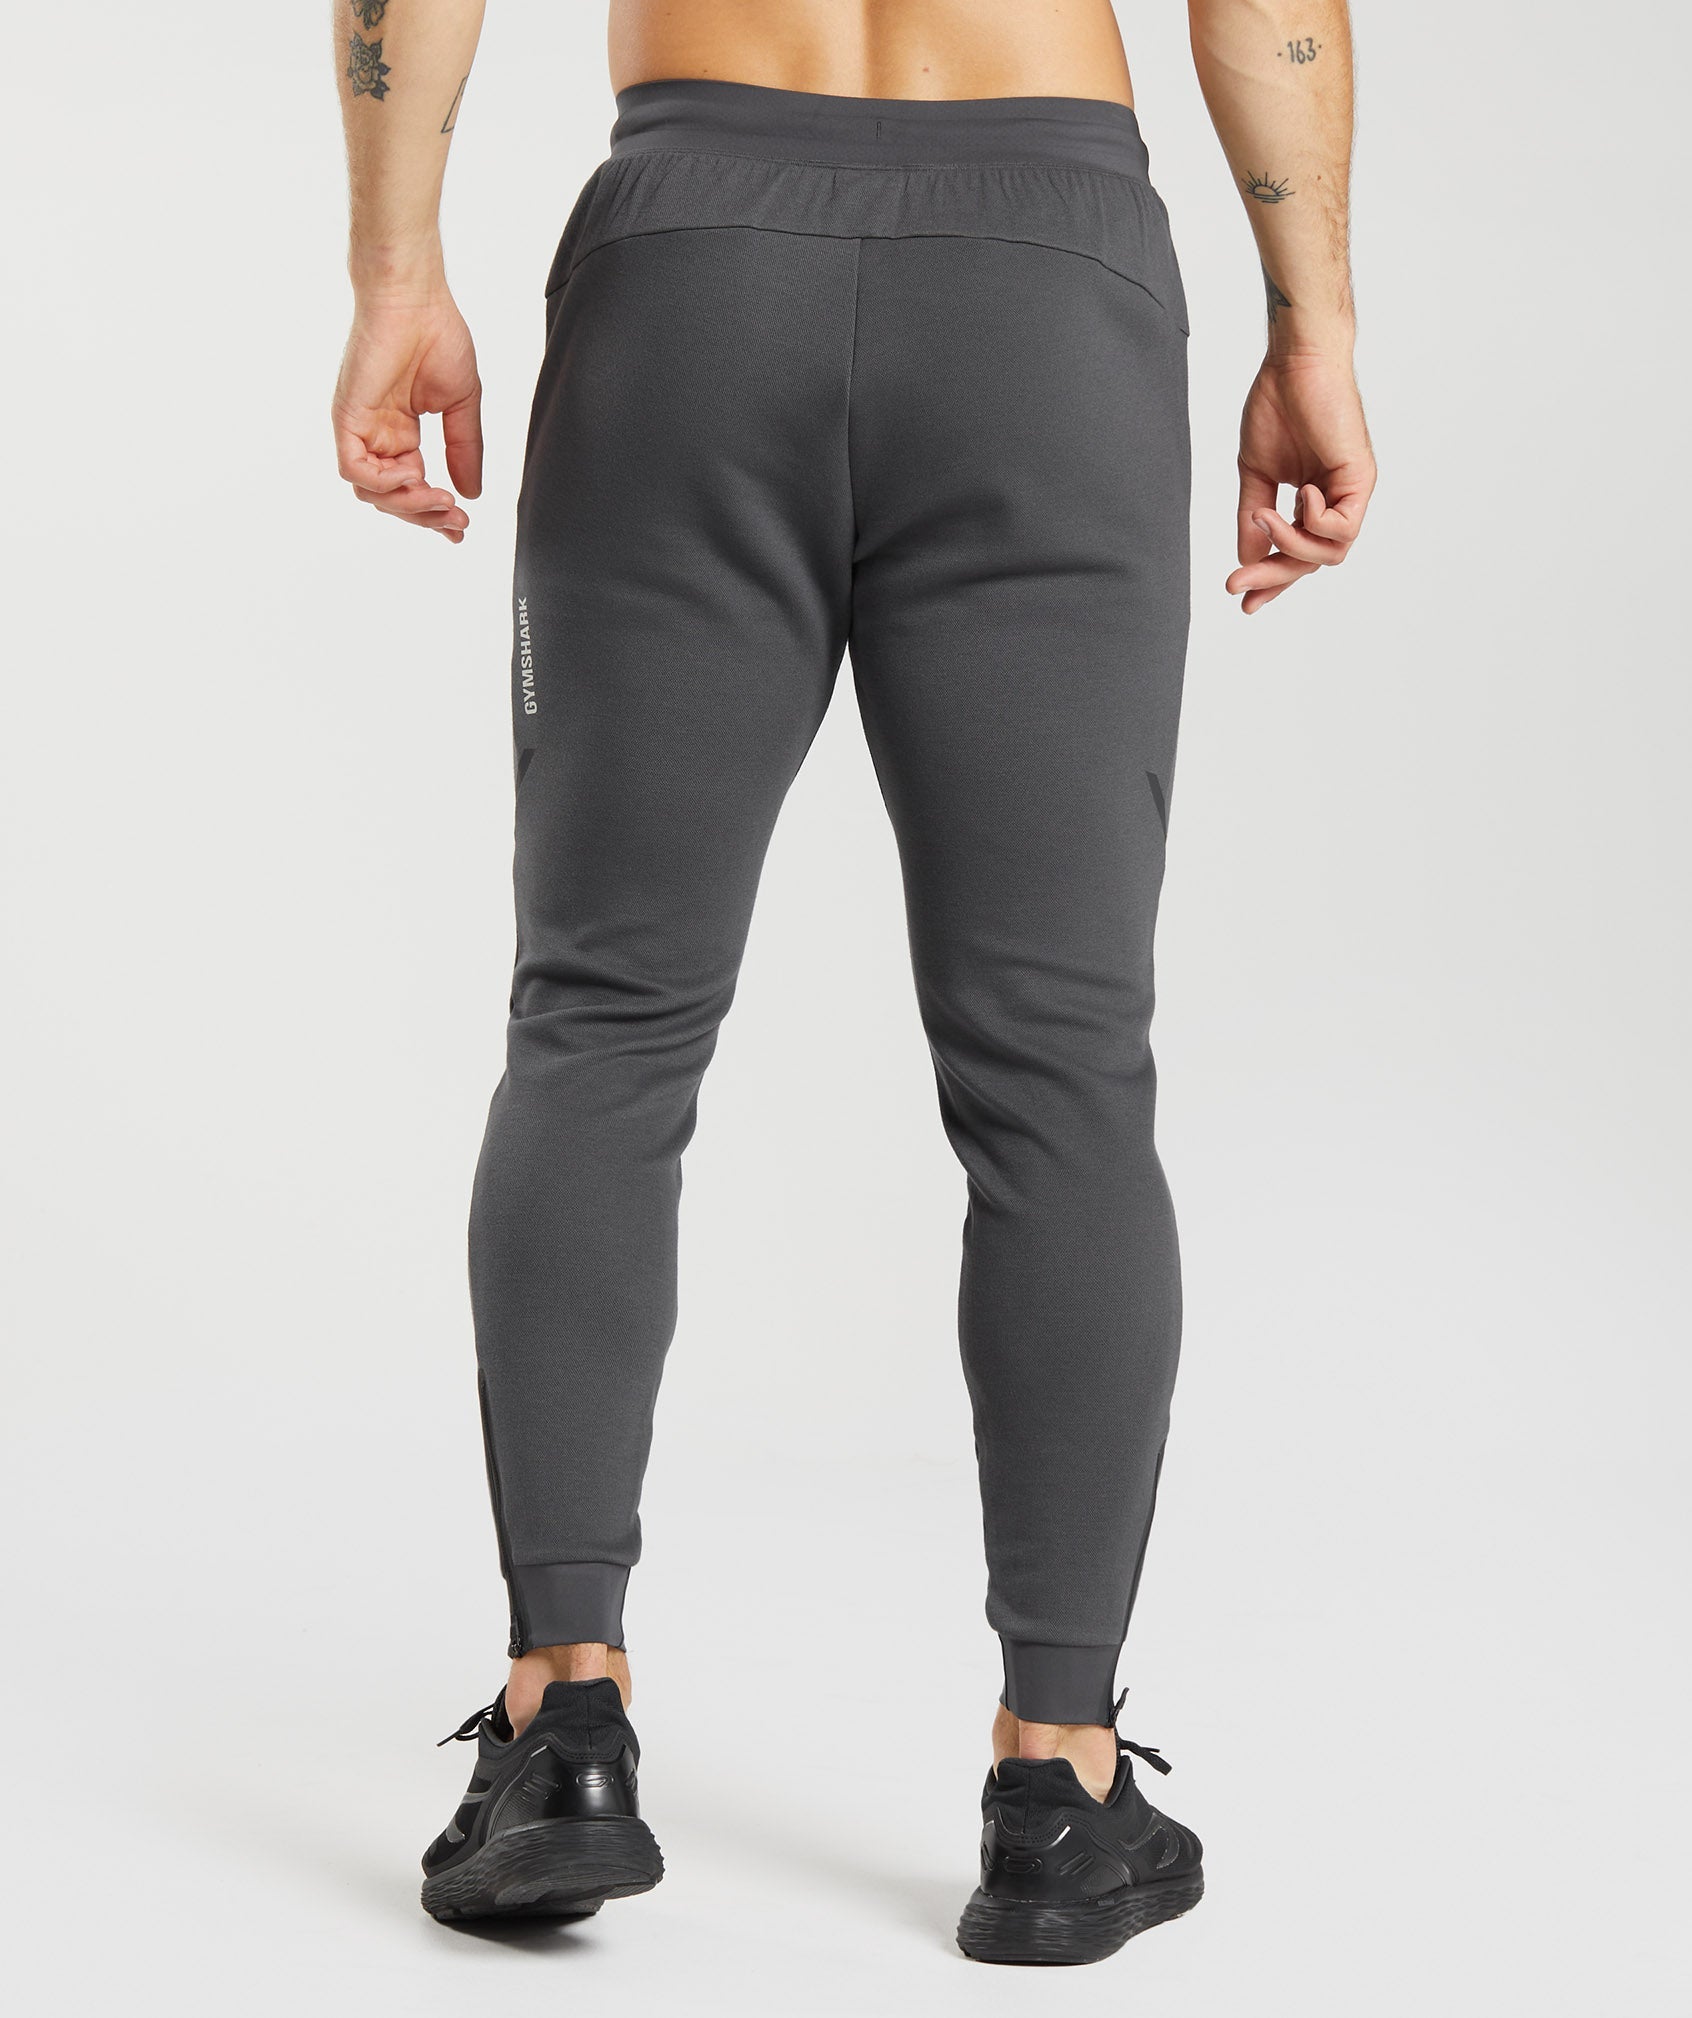 Gymshark Classic Fit Sweat Pants for Men